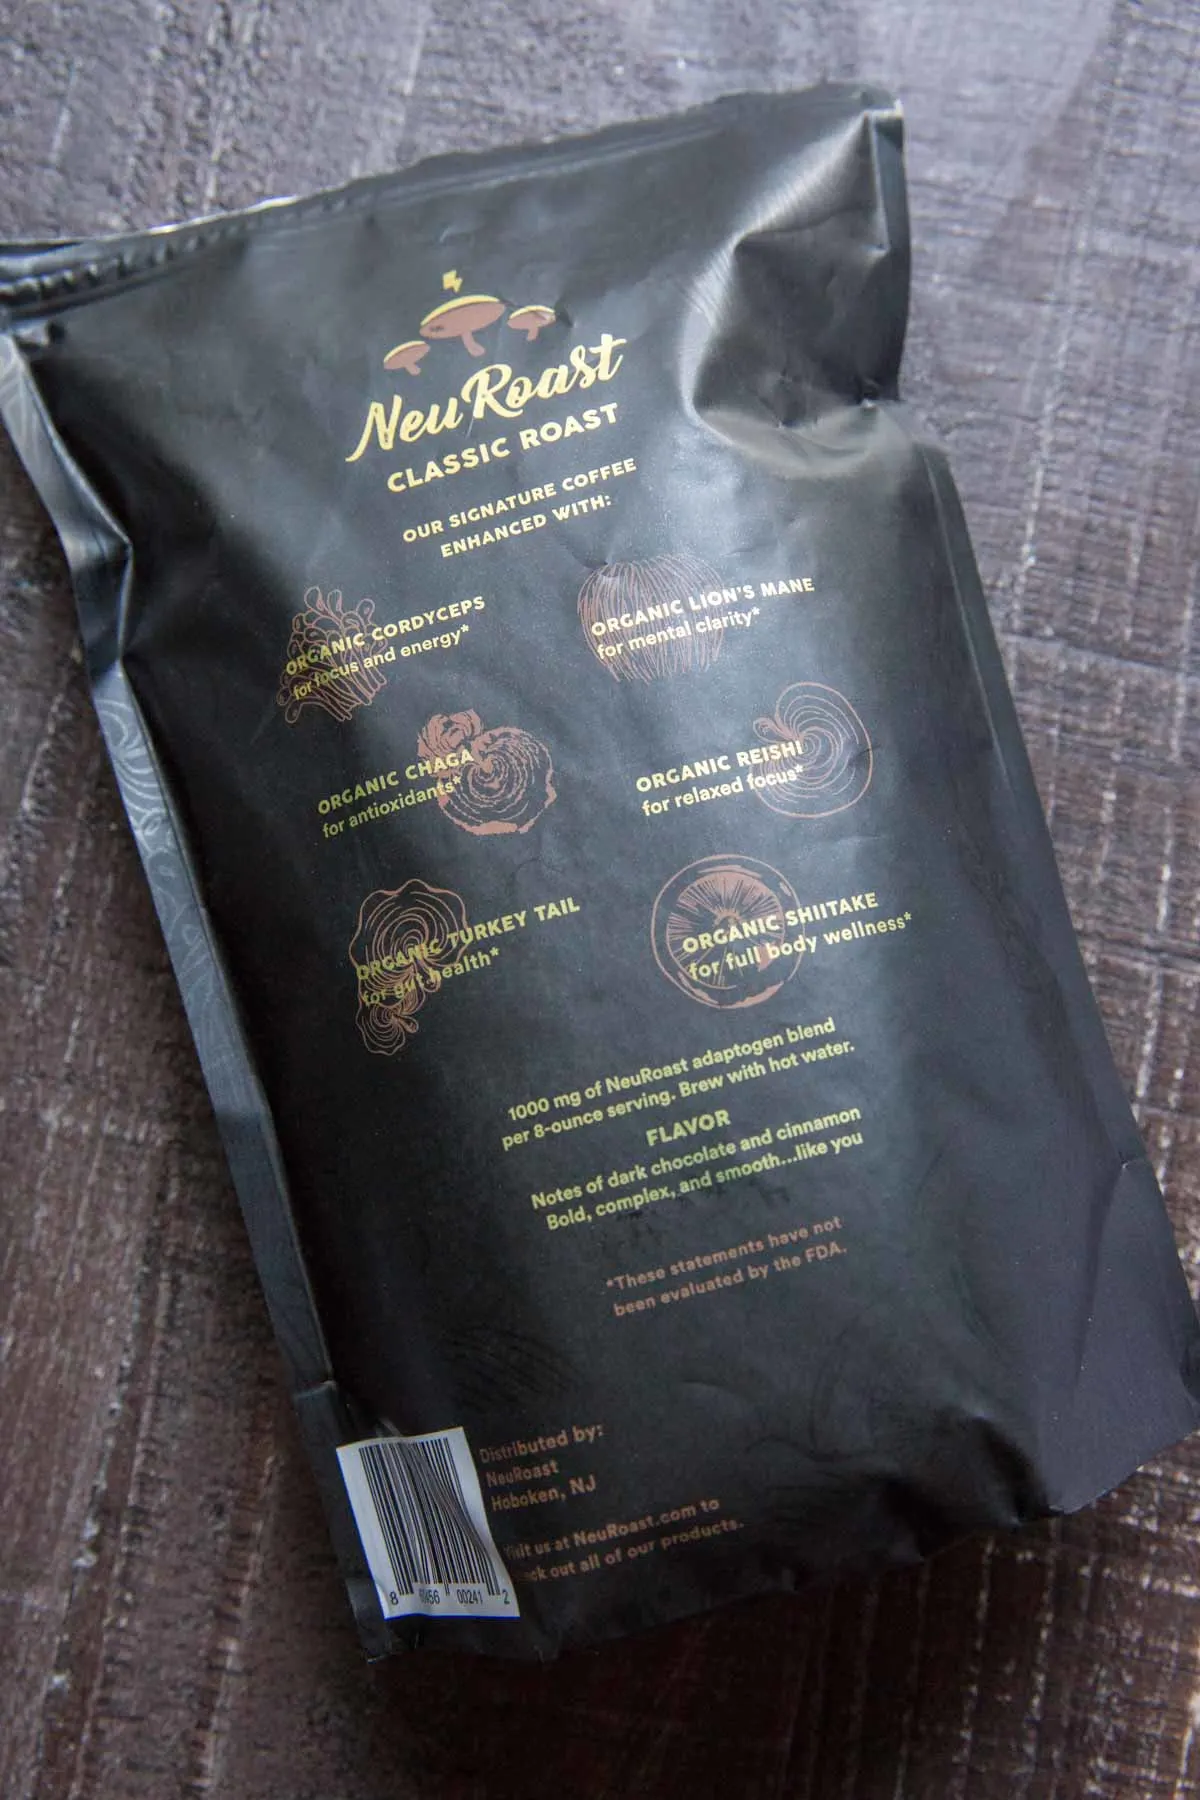 Neuroast Classic Coffee back of the bag